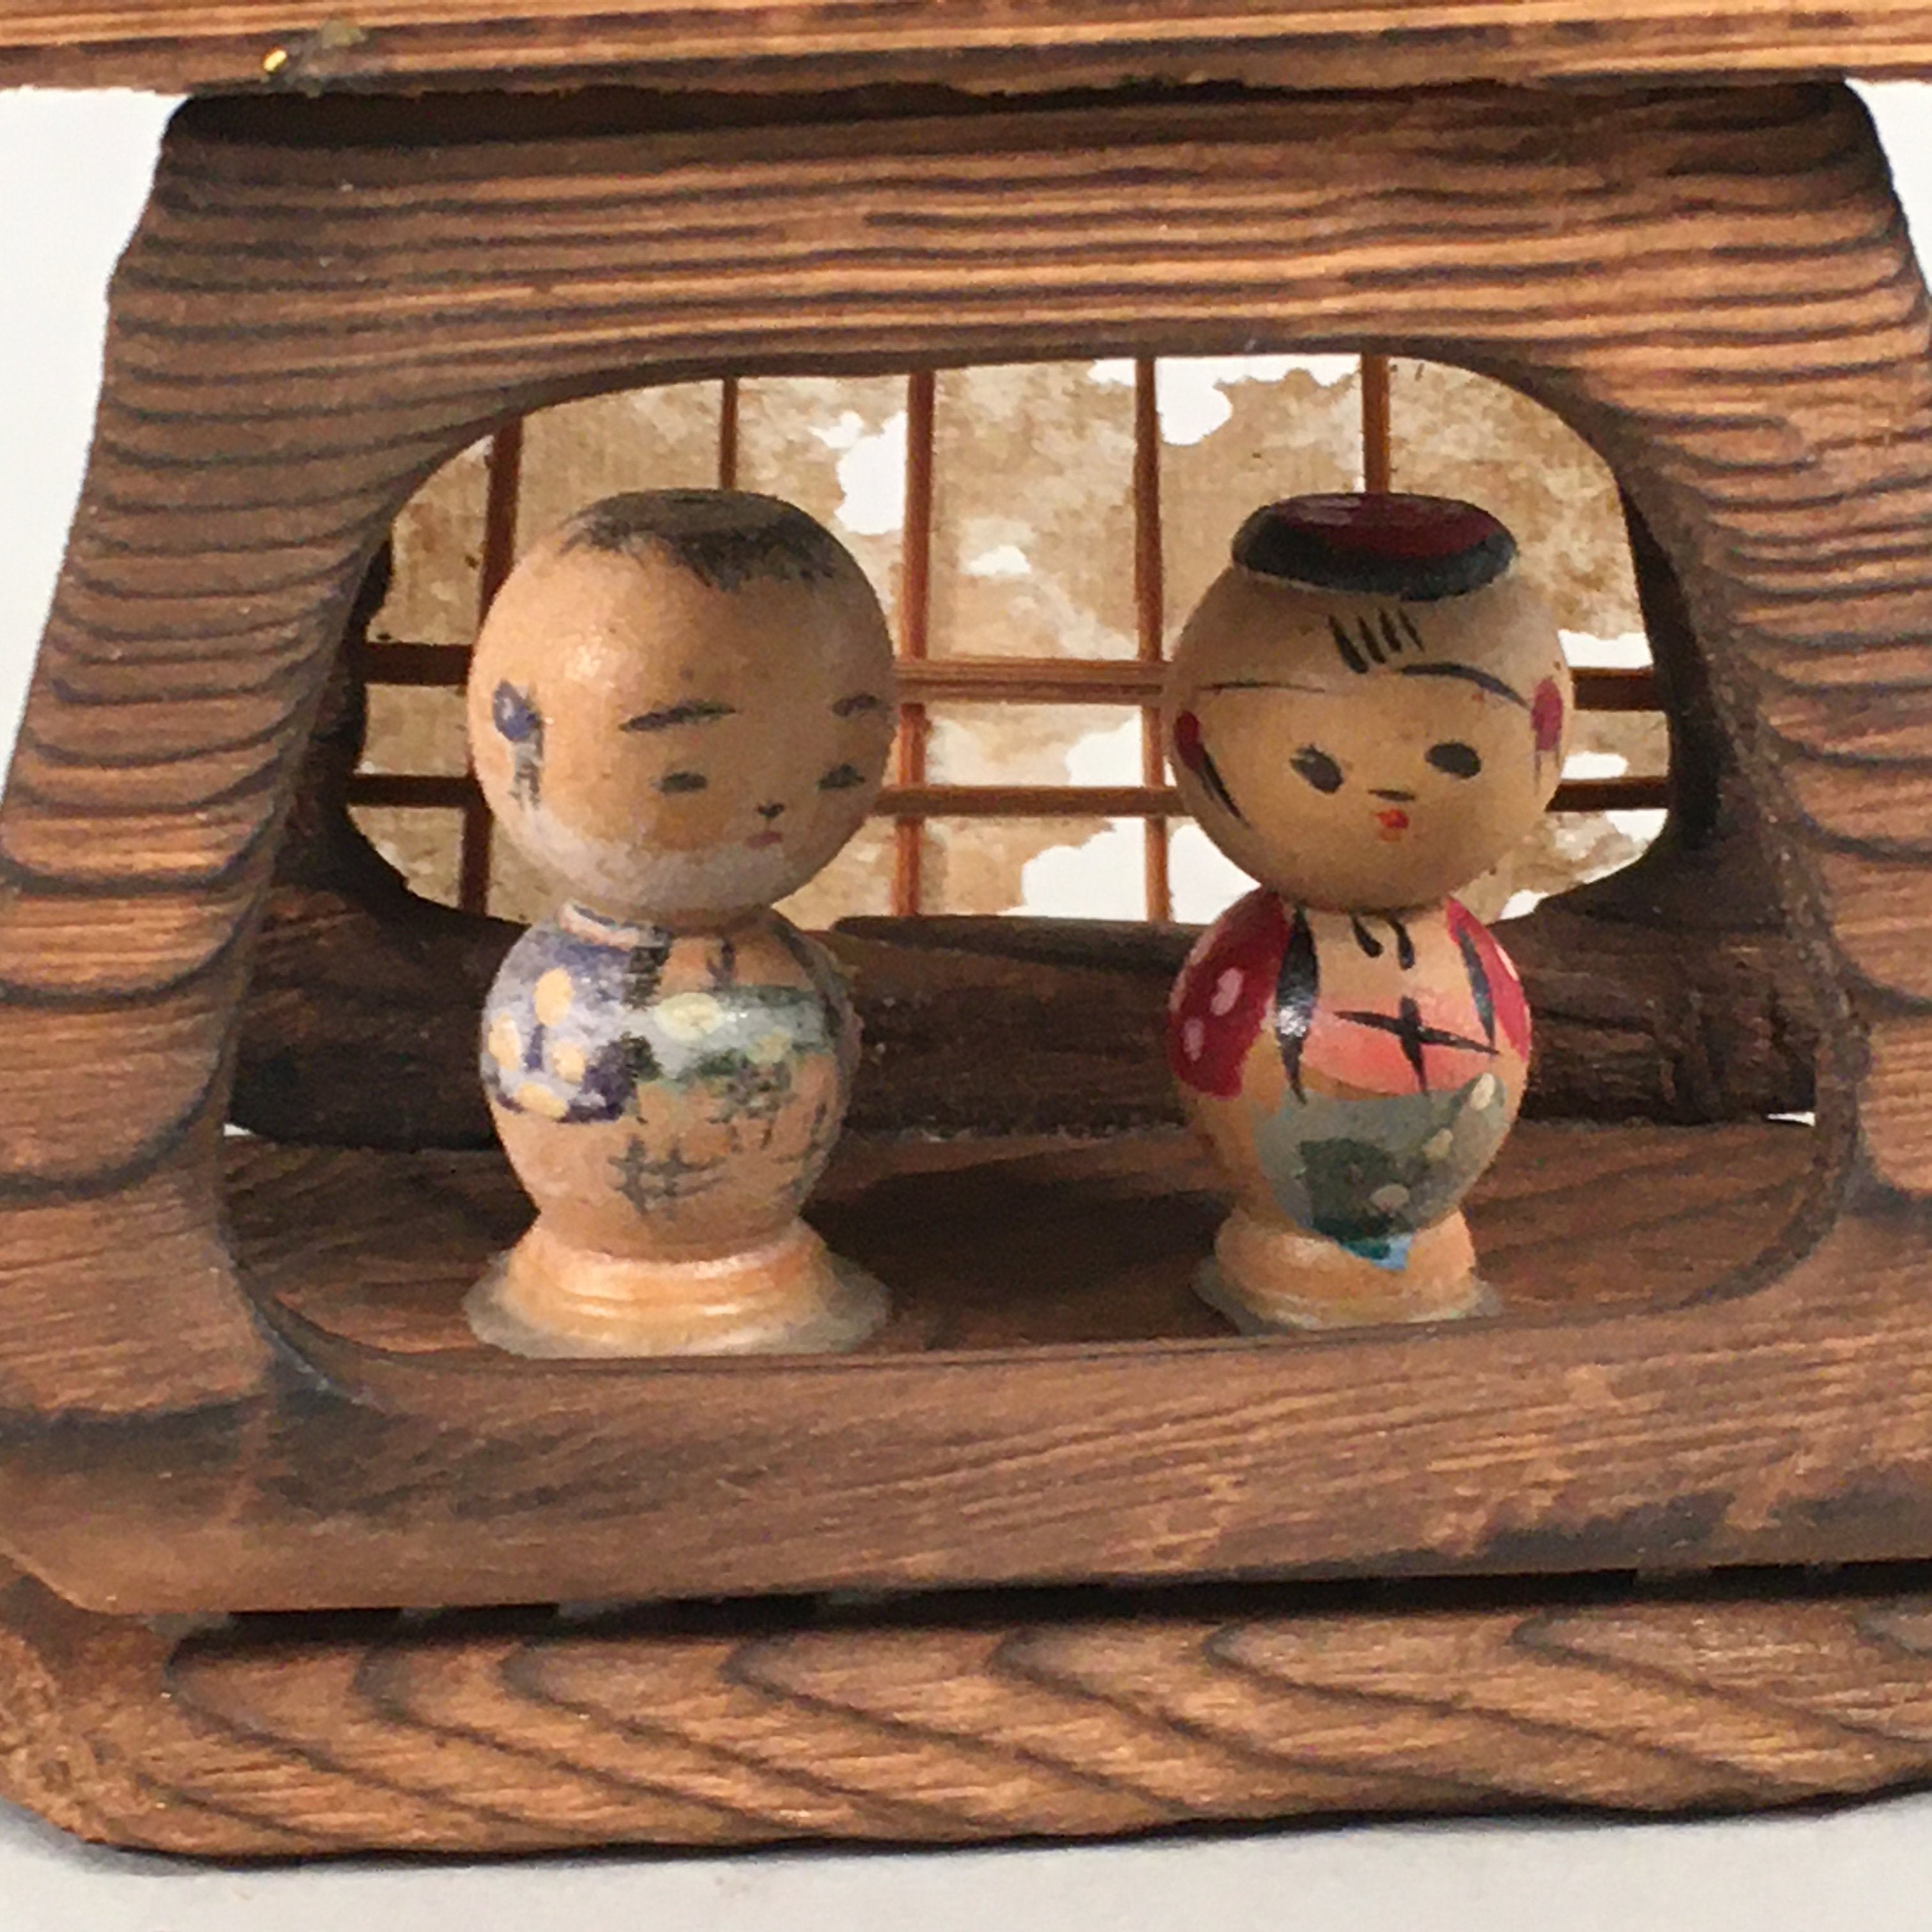 Japanese Kokeshi Doll Vtg Wooden Handmade Craft kago Mikoshi Figurine KF545